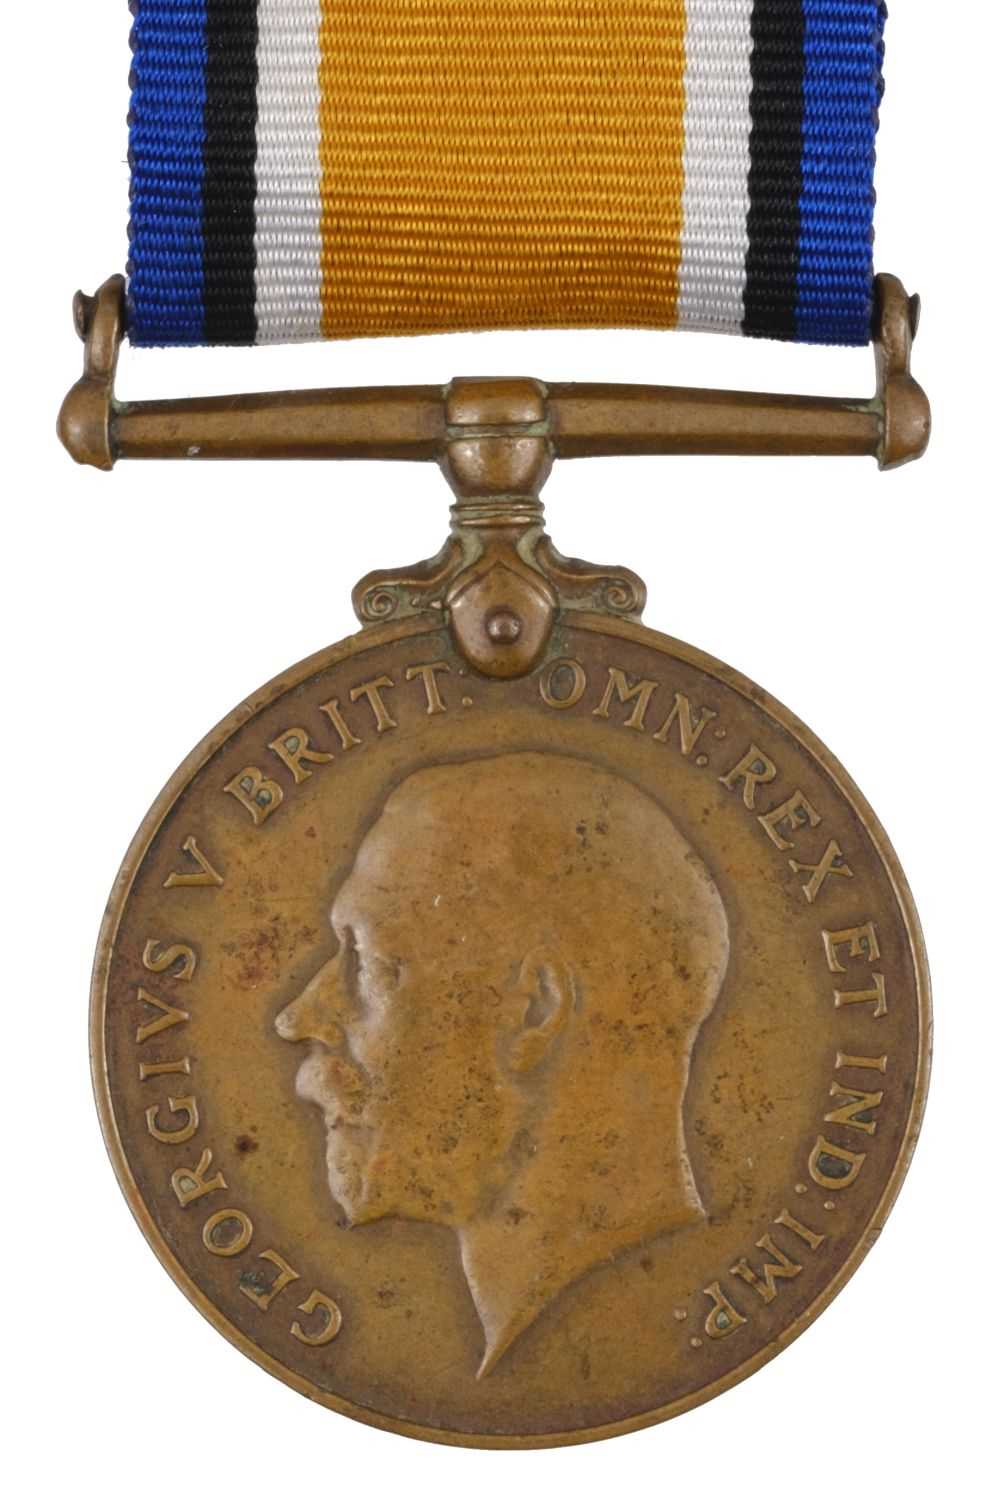 Lot 114 - British War Medal, bronze issue (Clk. E.N. Lambert. 104 Lab. Cps.)